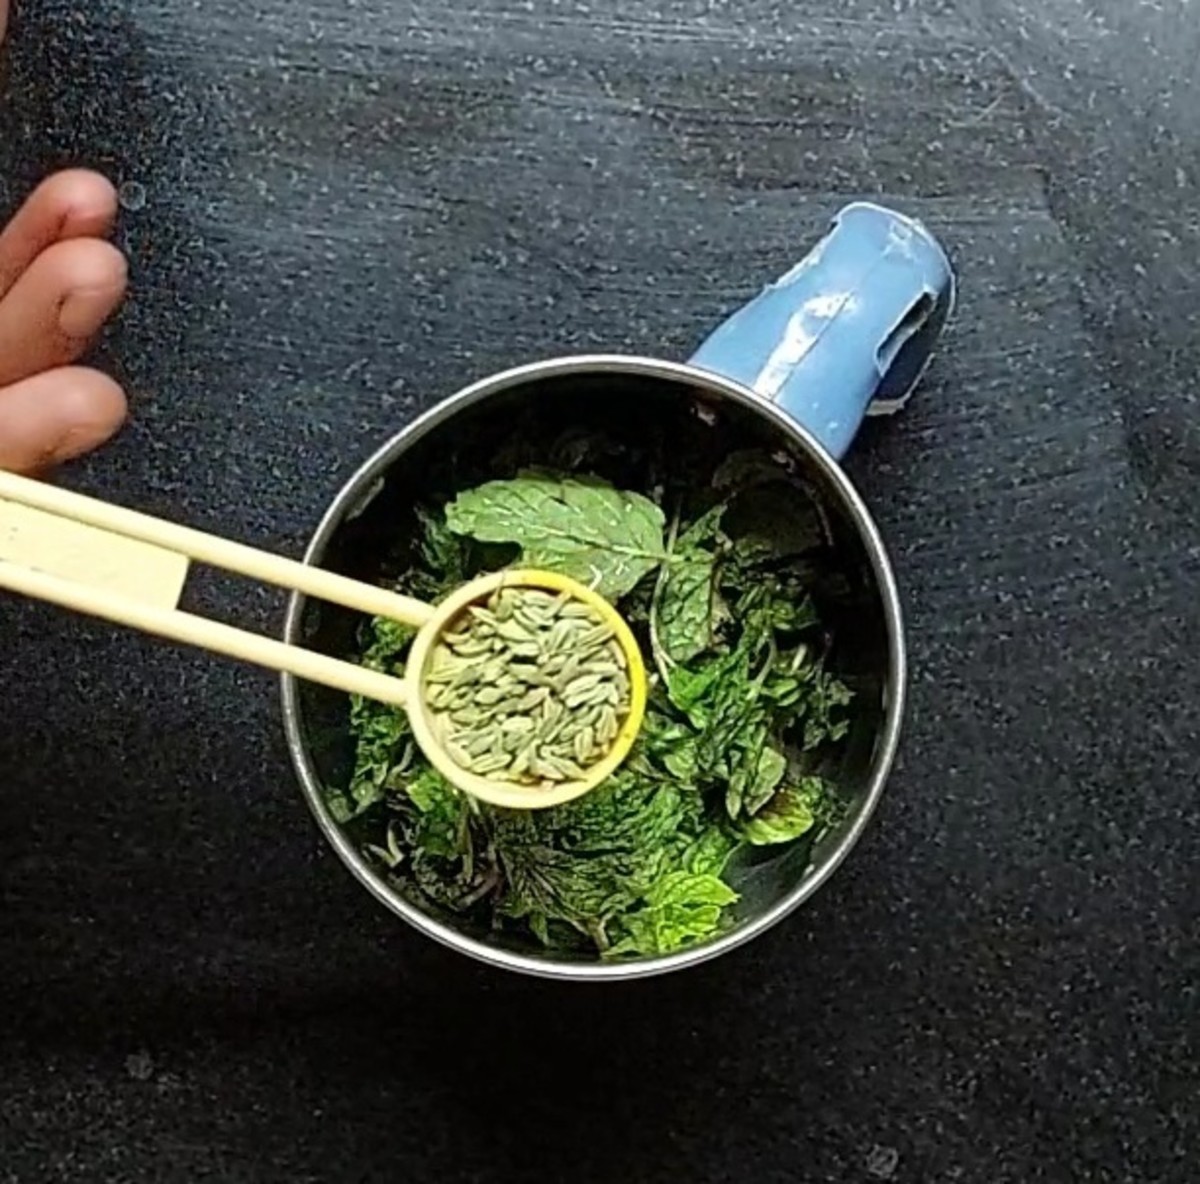 Add 1 teaspoon fennel seeds.